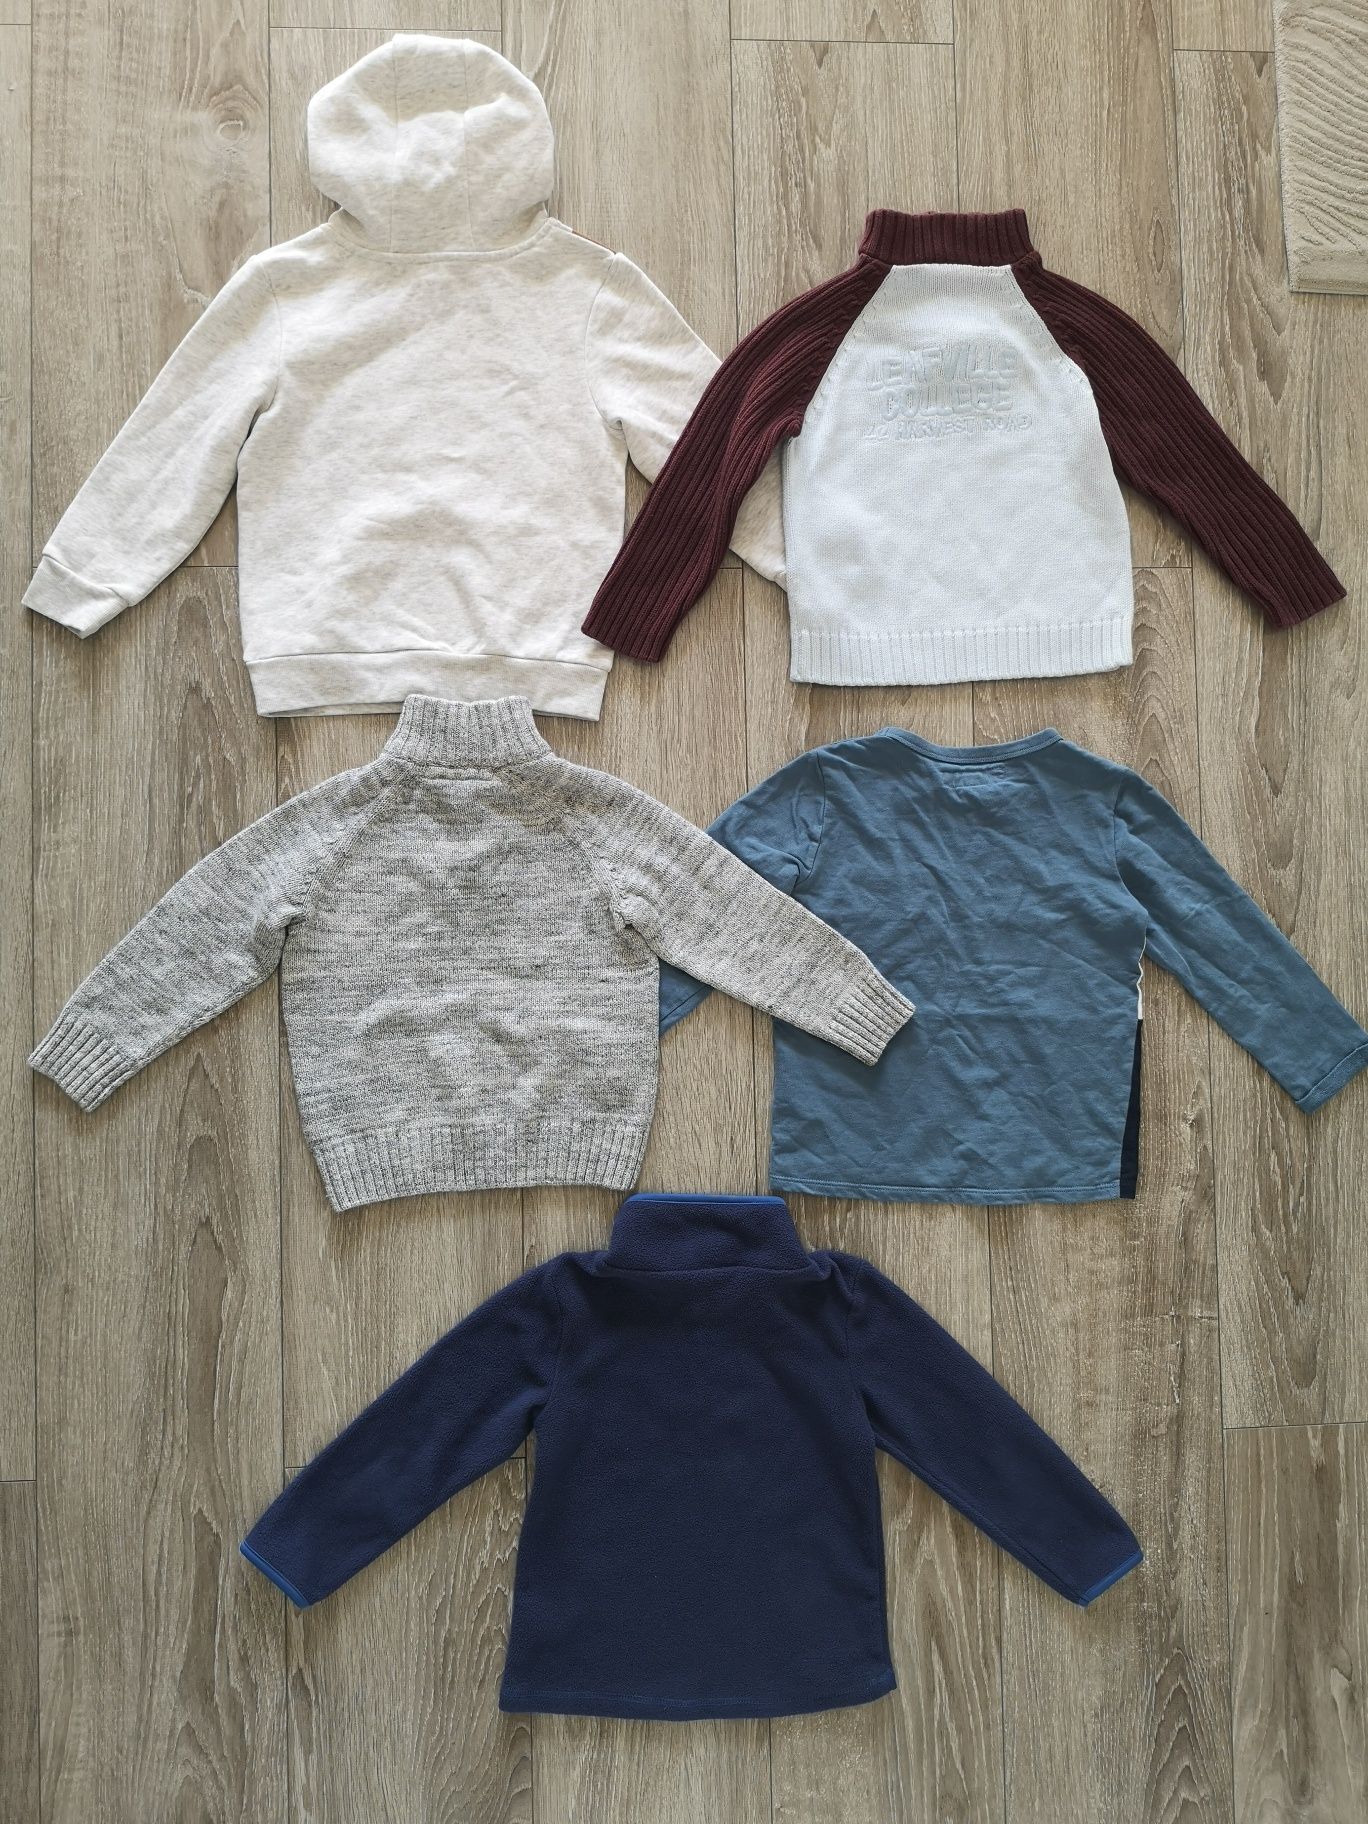 Bluza bluzka 104 110 kaptur sweter h&m komplet paka chłopiec polar